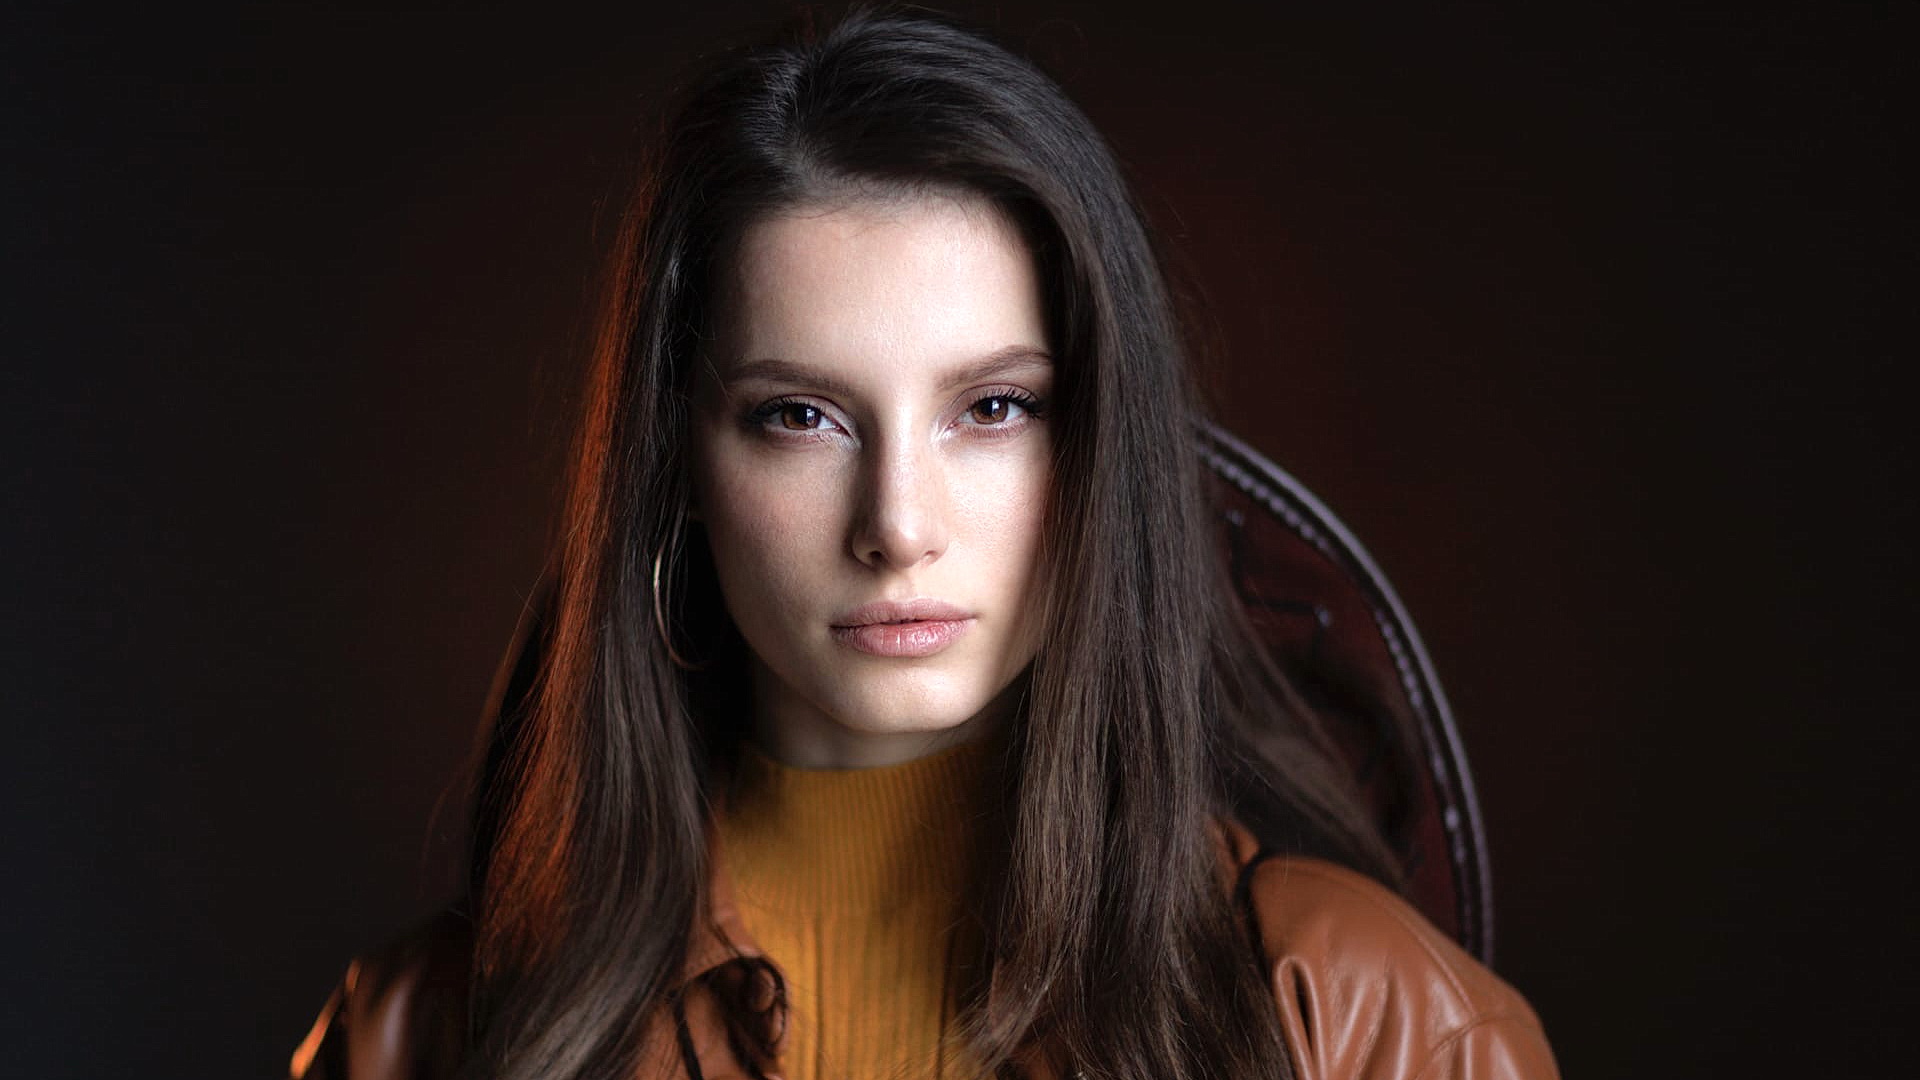 Free photo Portrait of modelTatiana Sorokina on a dark background